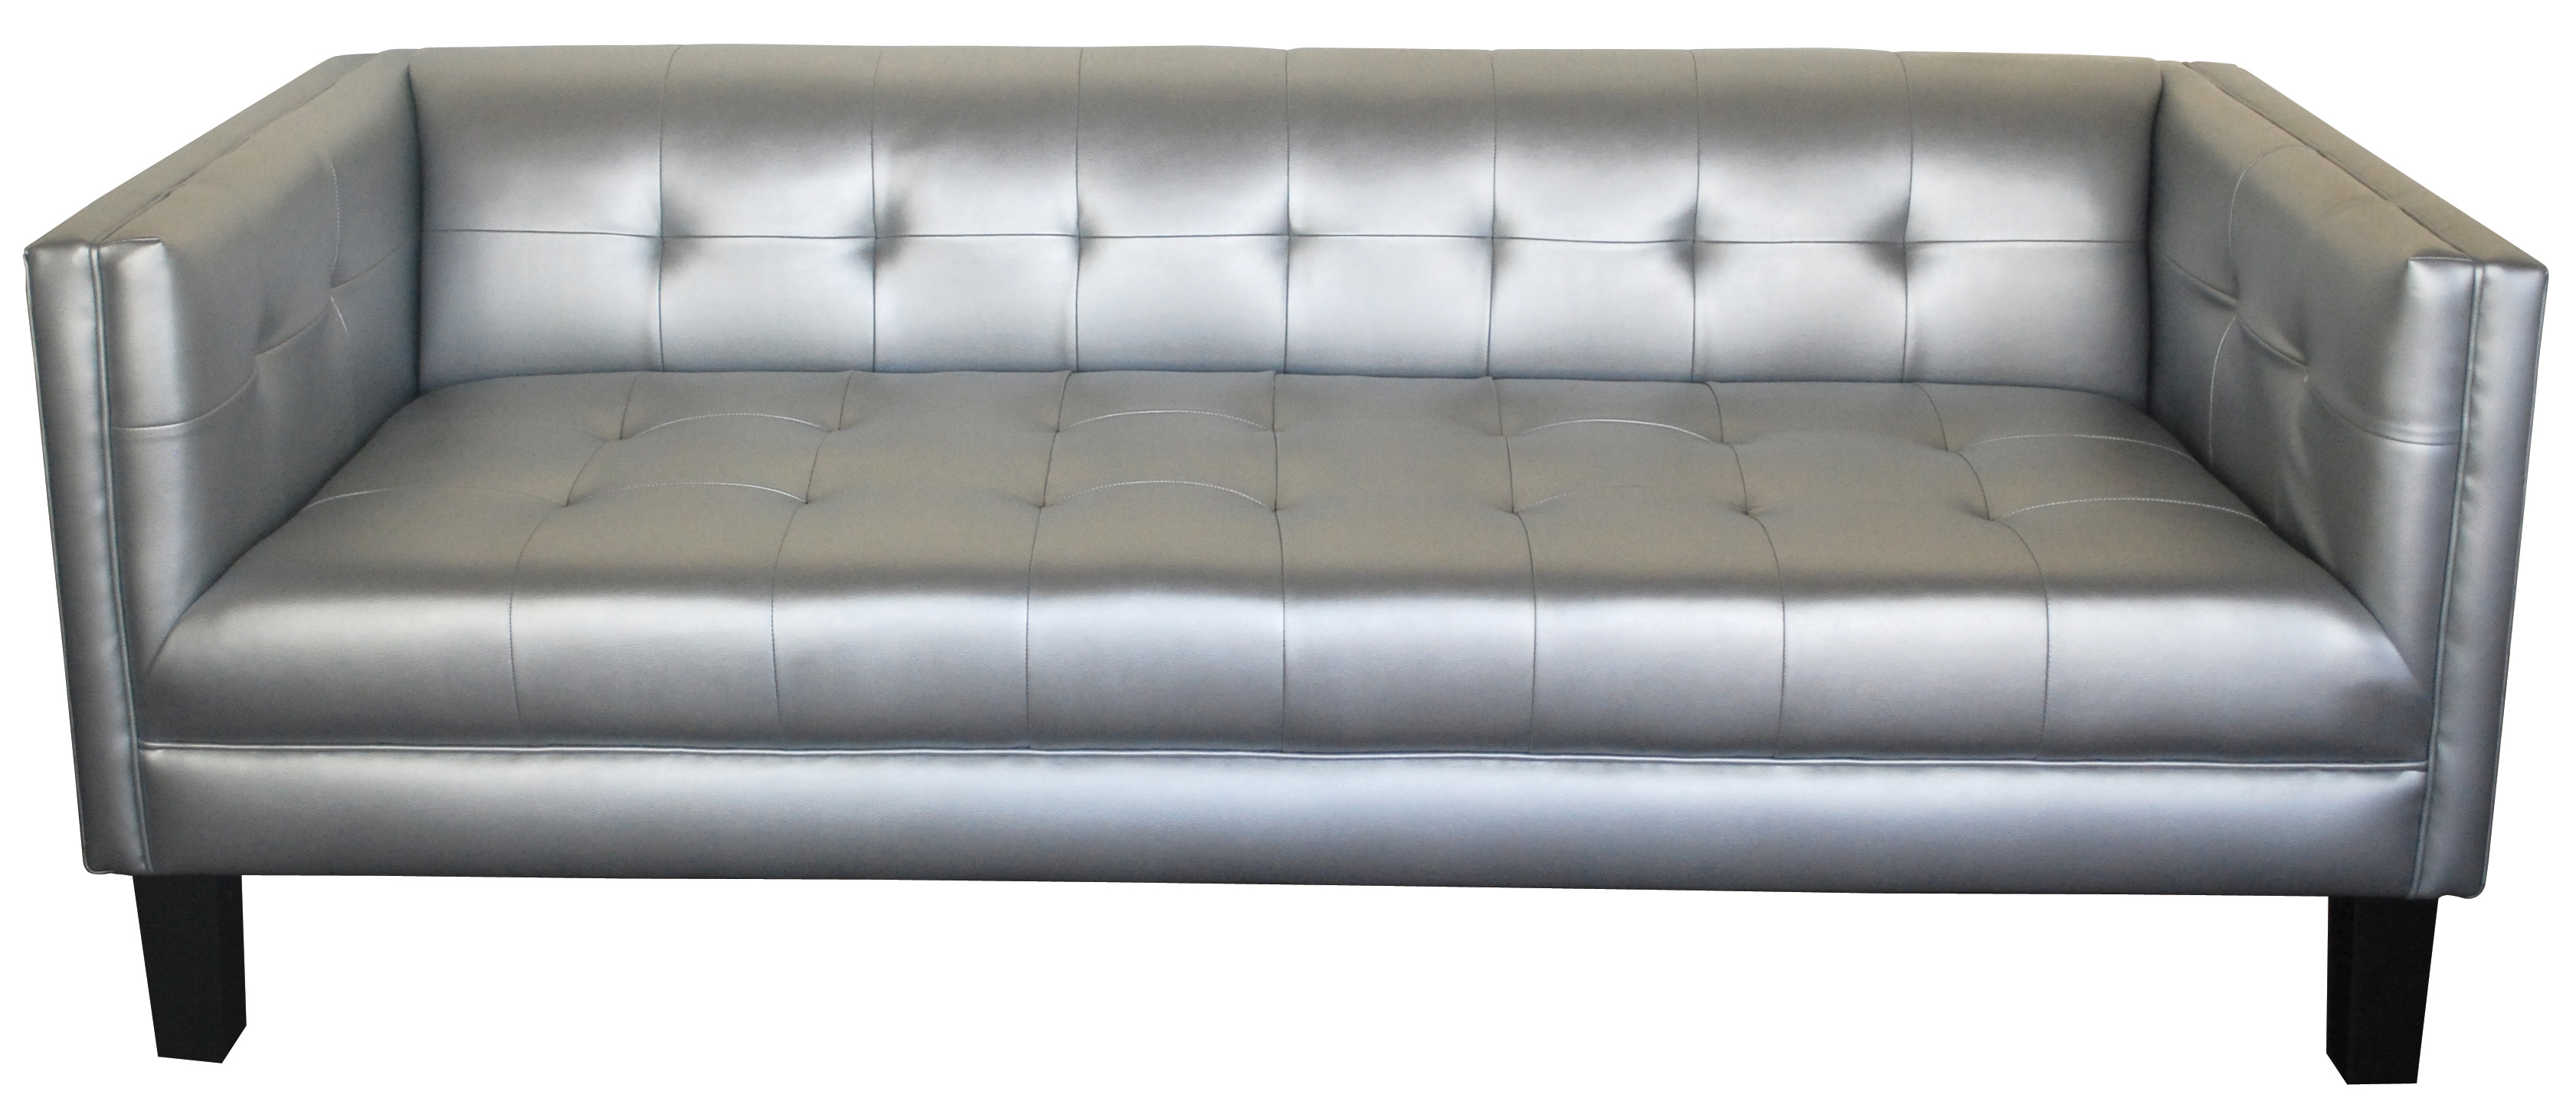 silver metallic sharpie stain leather sofa